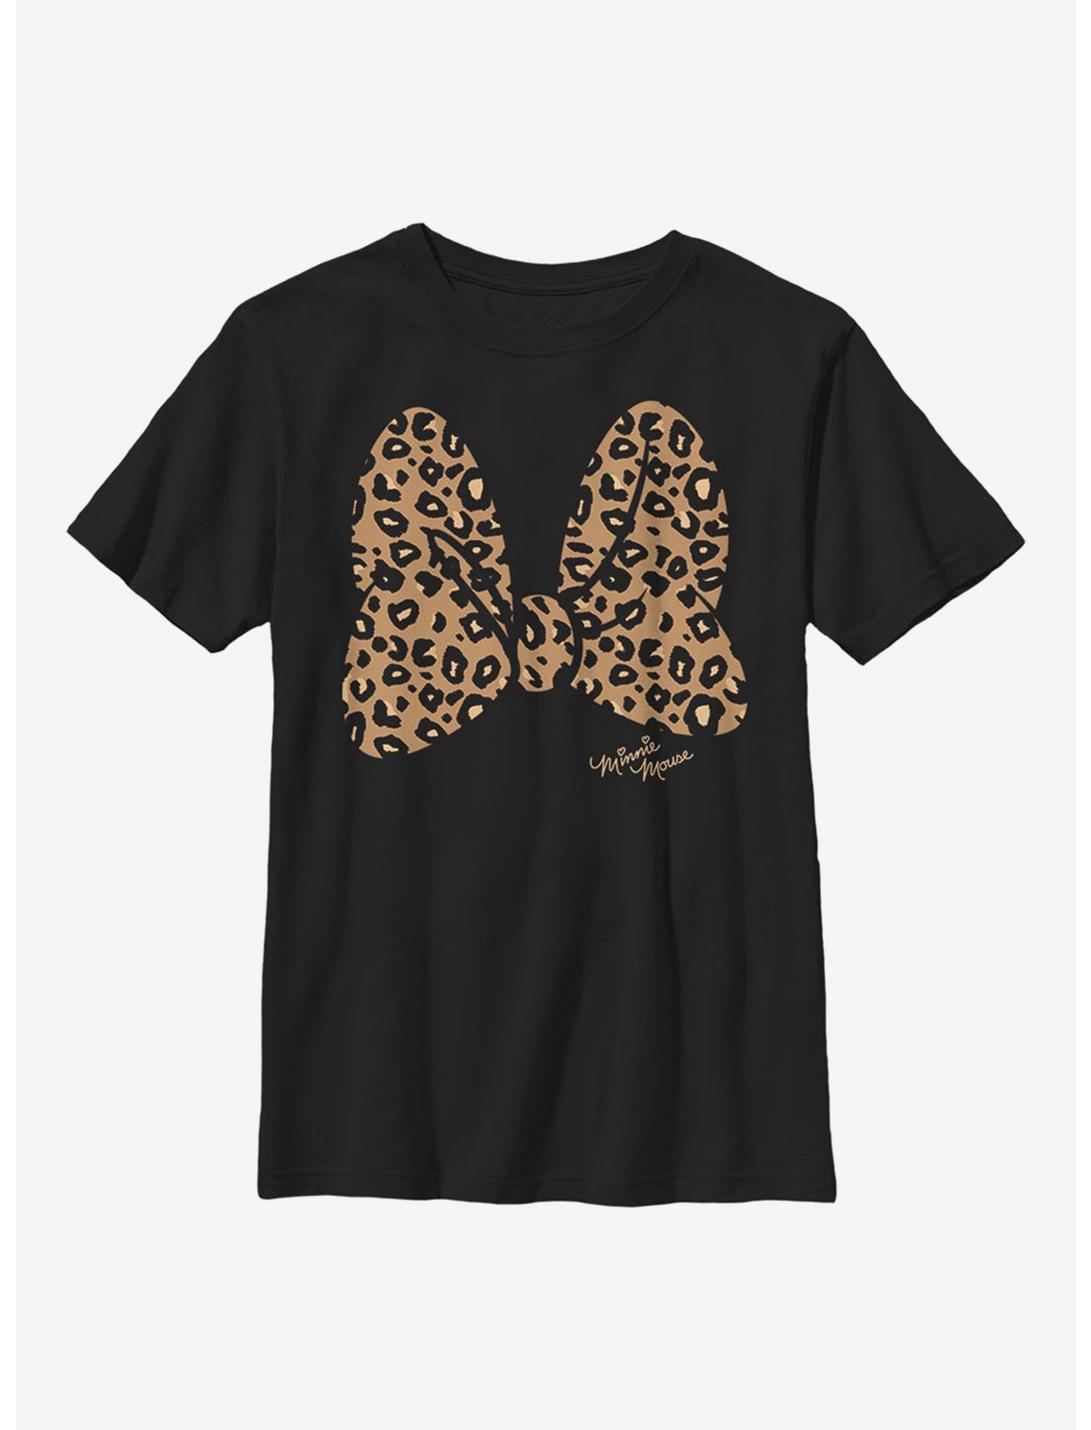 Plus Size Disney Mickey Mouse Animal Print Bow Youth T-Shirt, BLACK, hi-res